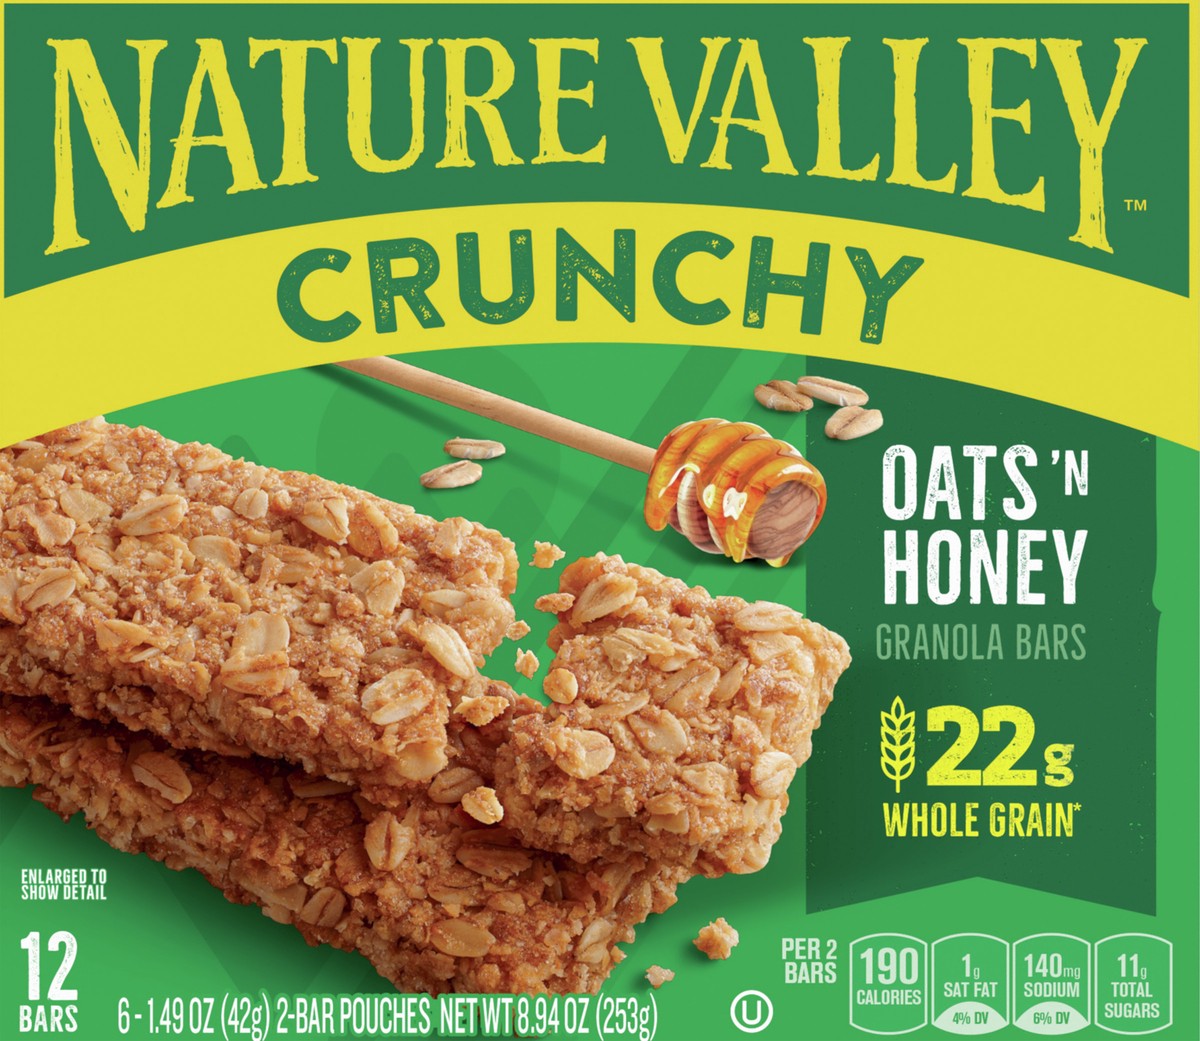 slide 10 of 14, Nature Valley Crunchy Granola Bars, Oats 'N Honey, 8.94 oz, 6 ct, 12 bars, 6 ct